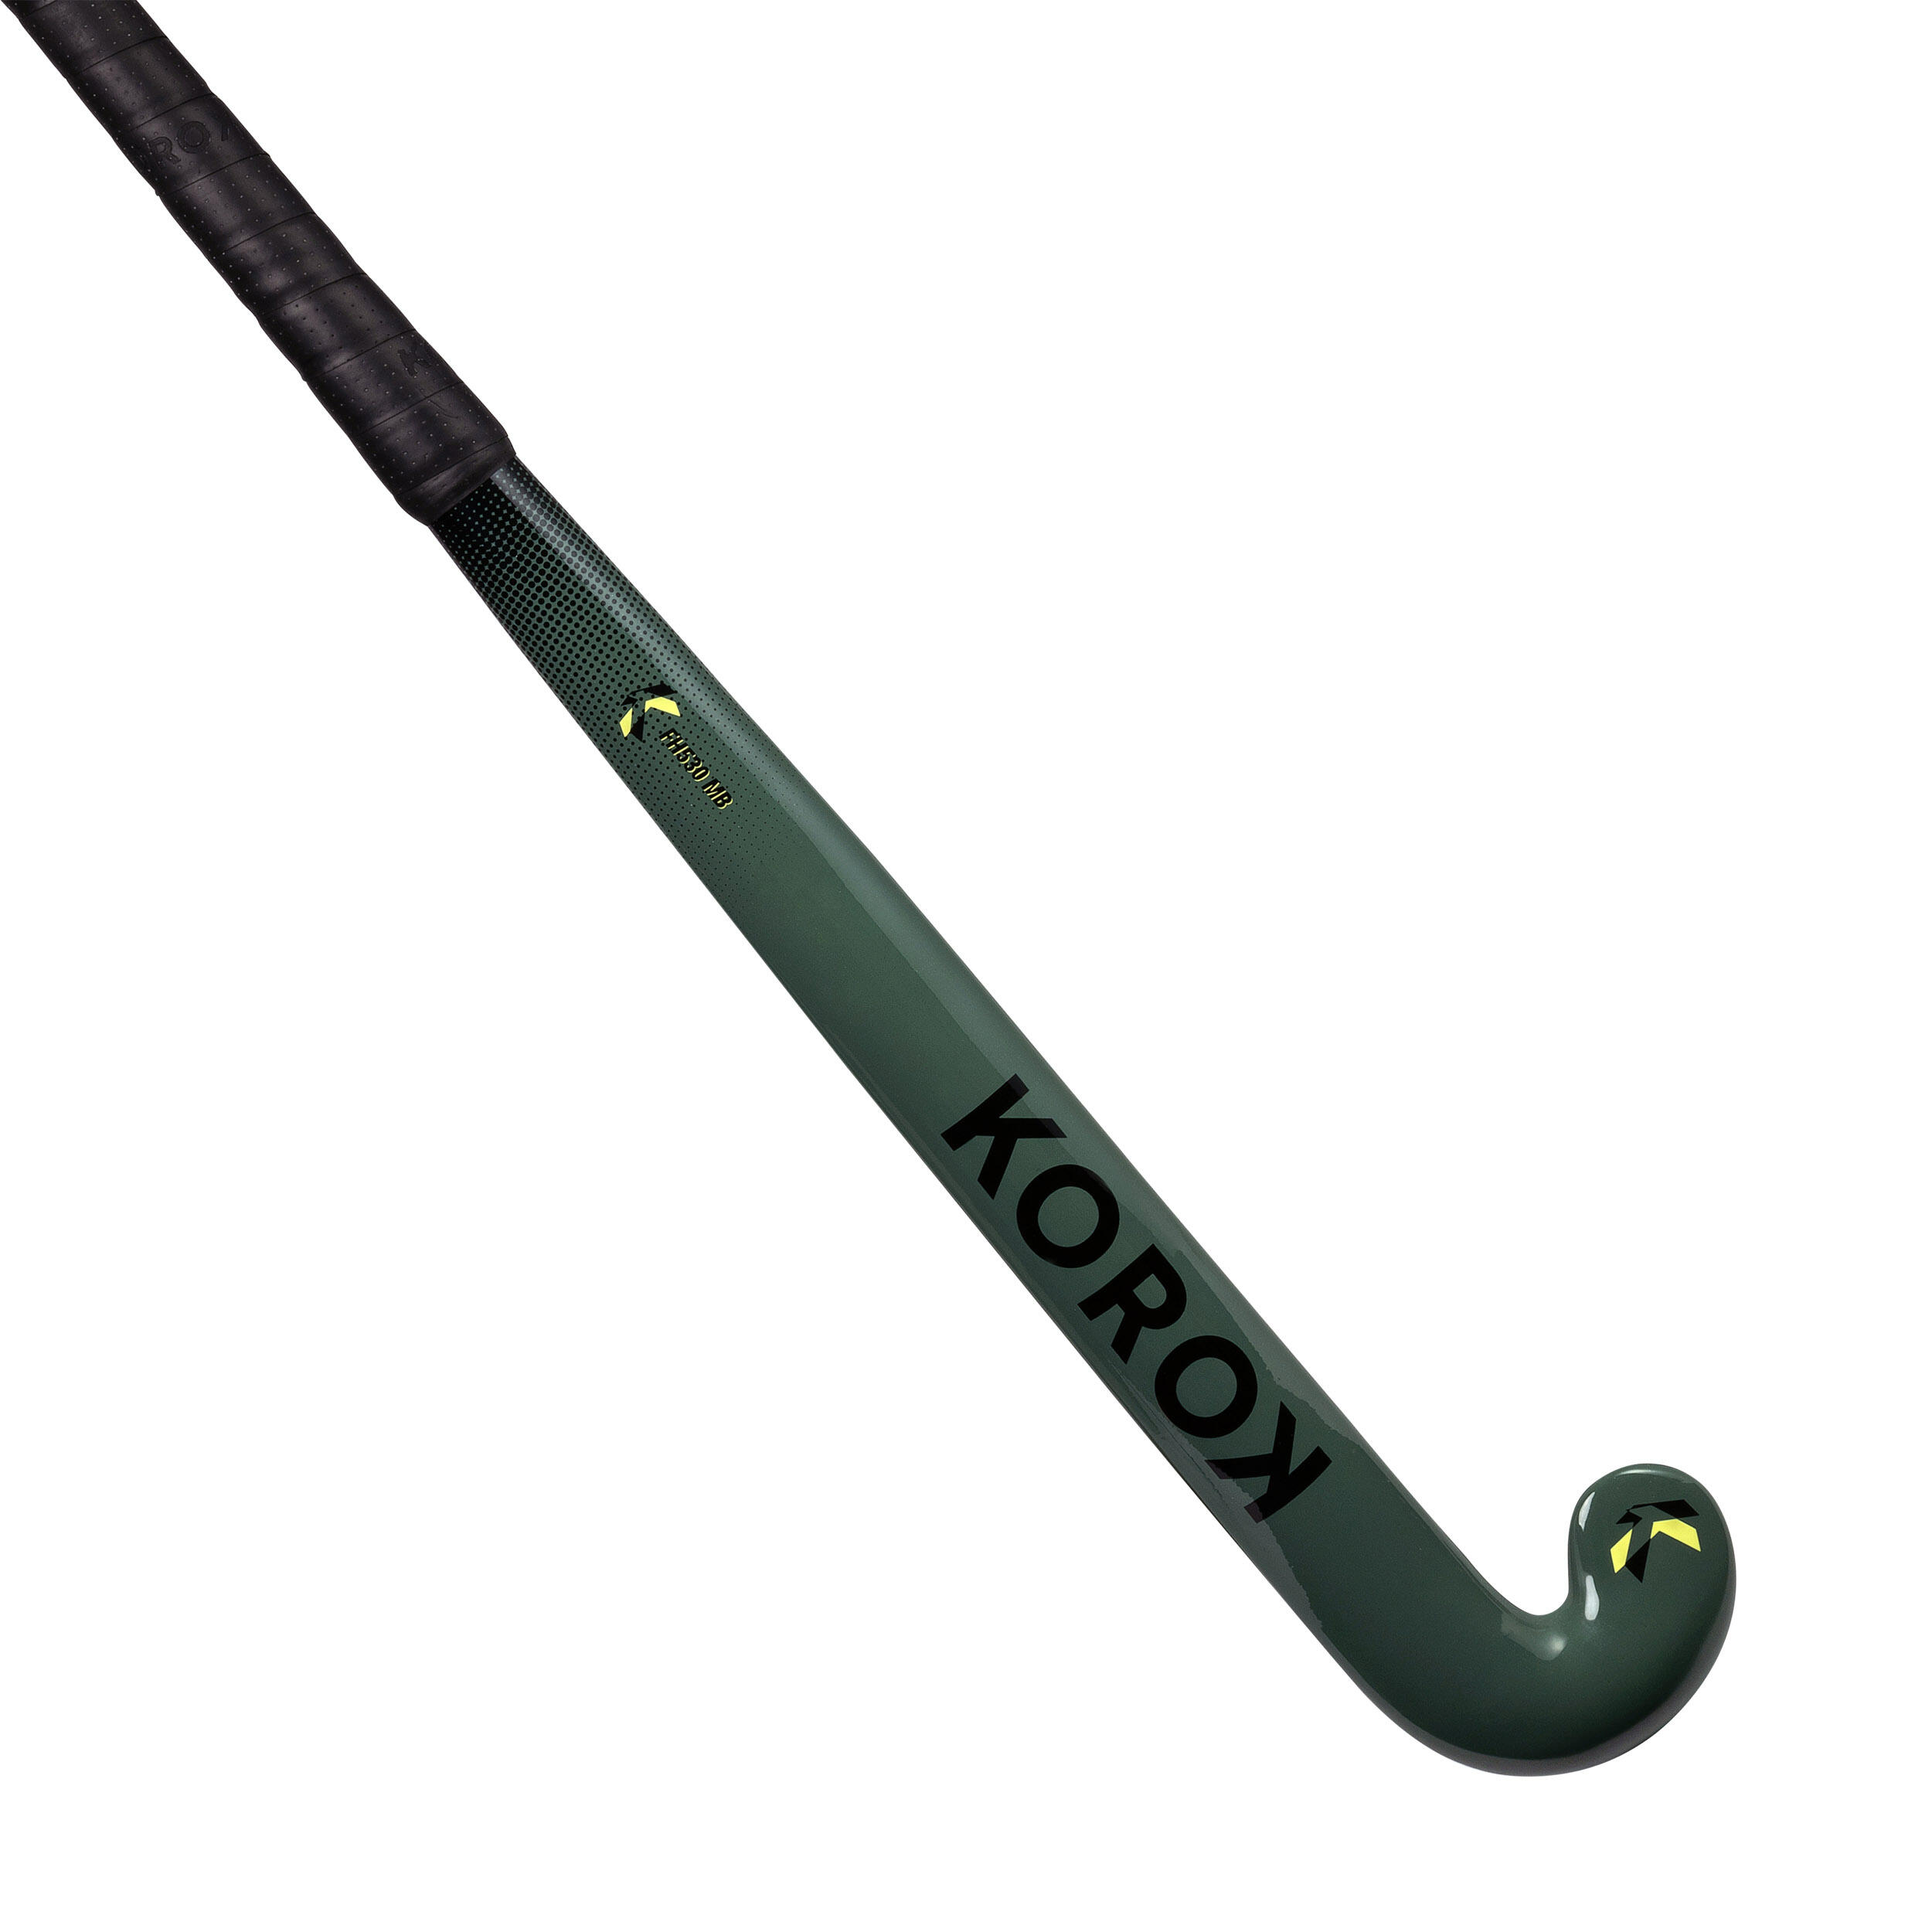 Adult Intermediate 30% Carbon Mid Bow Field Hockey Stick FH530 - Khaki/Black 1/12